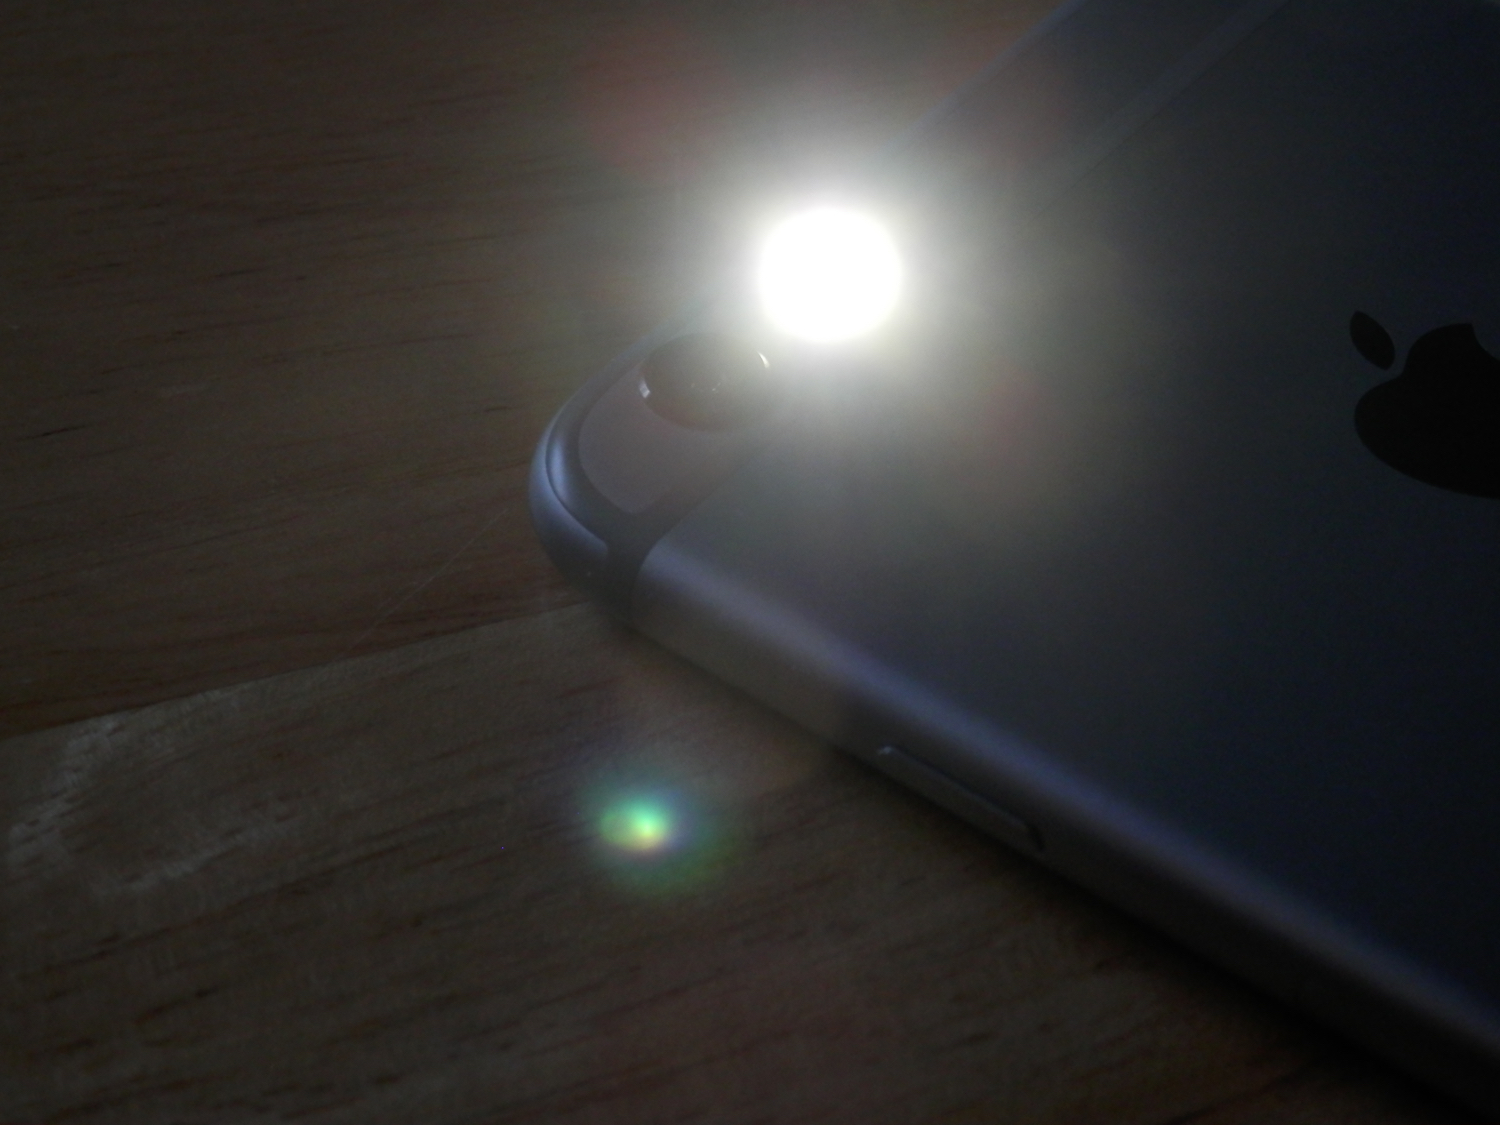 iPhone camera problems - flash stuck